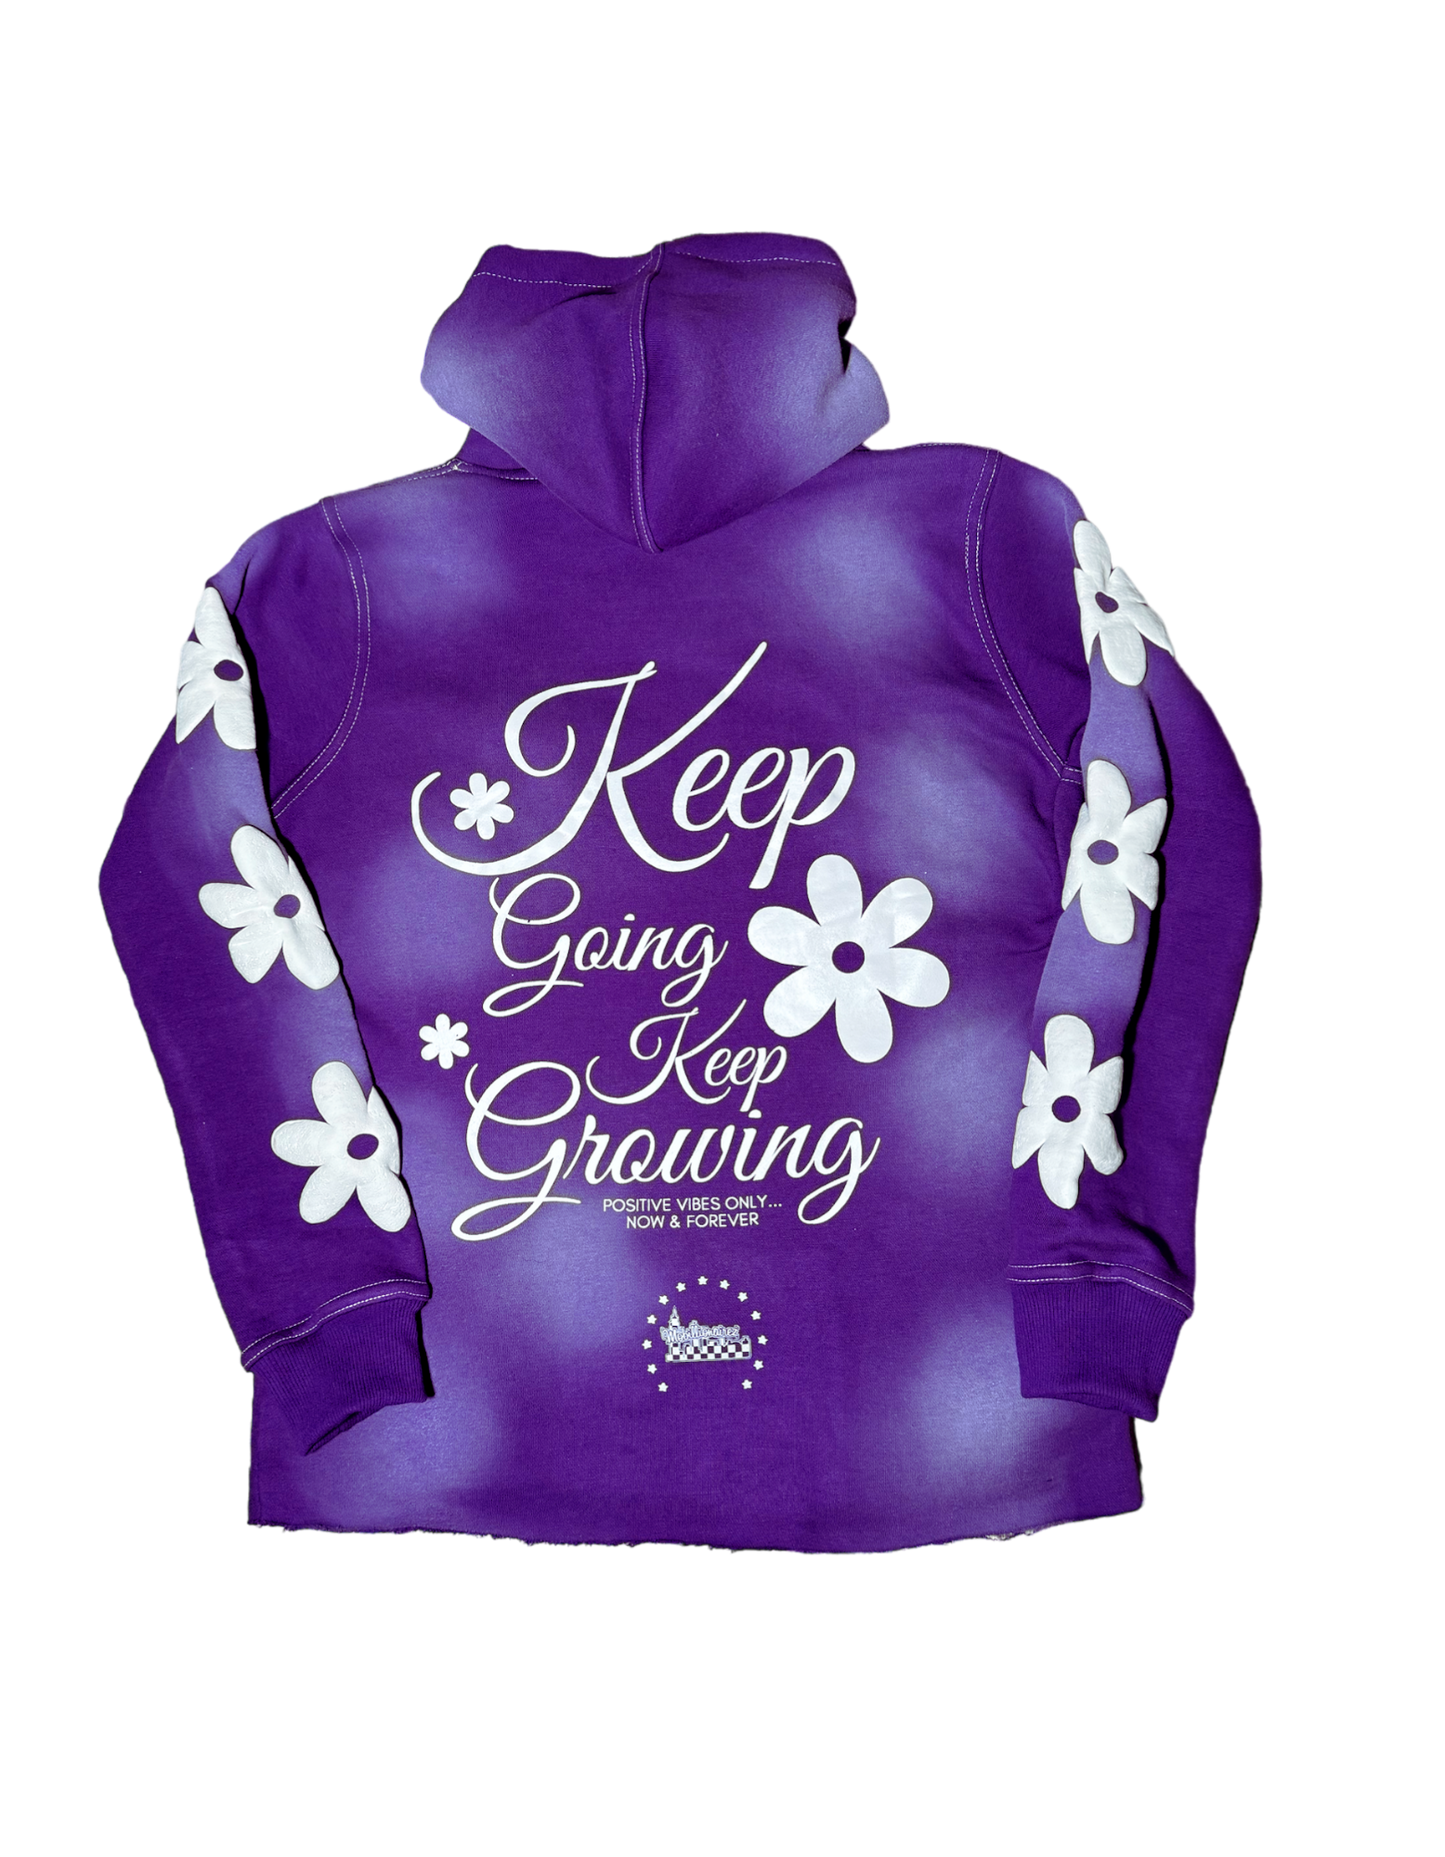 Mobillionairez "Keep Going/Keep Growing" Hoodie Purple - (Unisex)